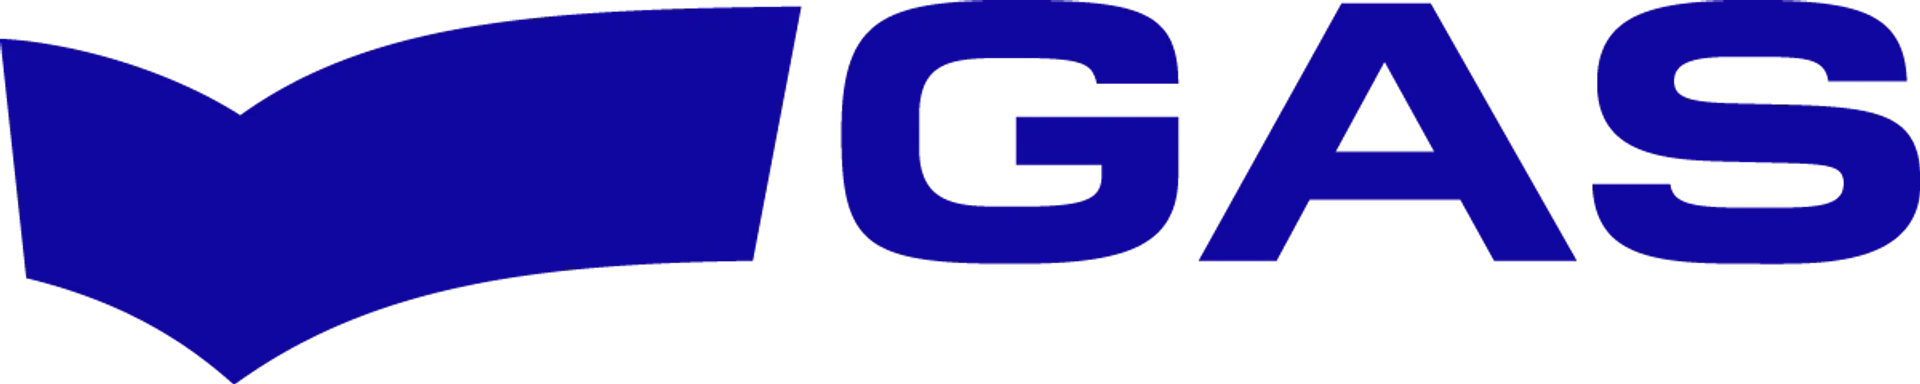 GAS JEANS logo